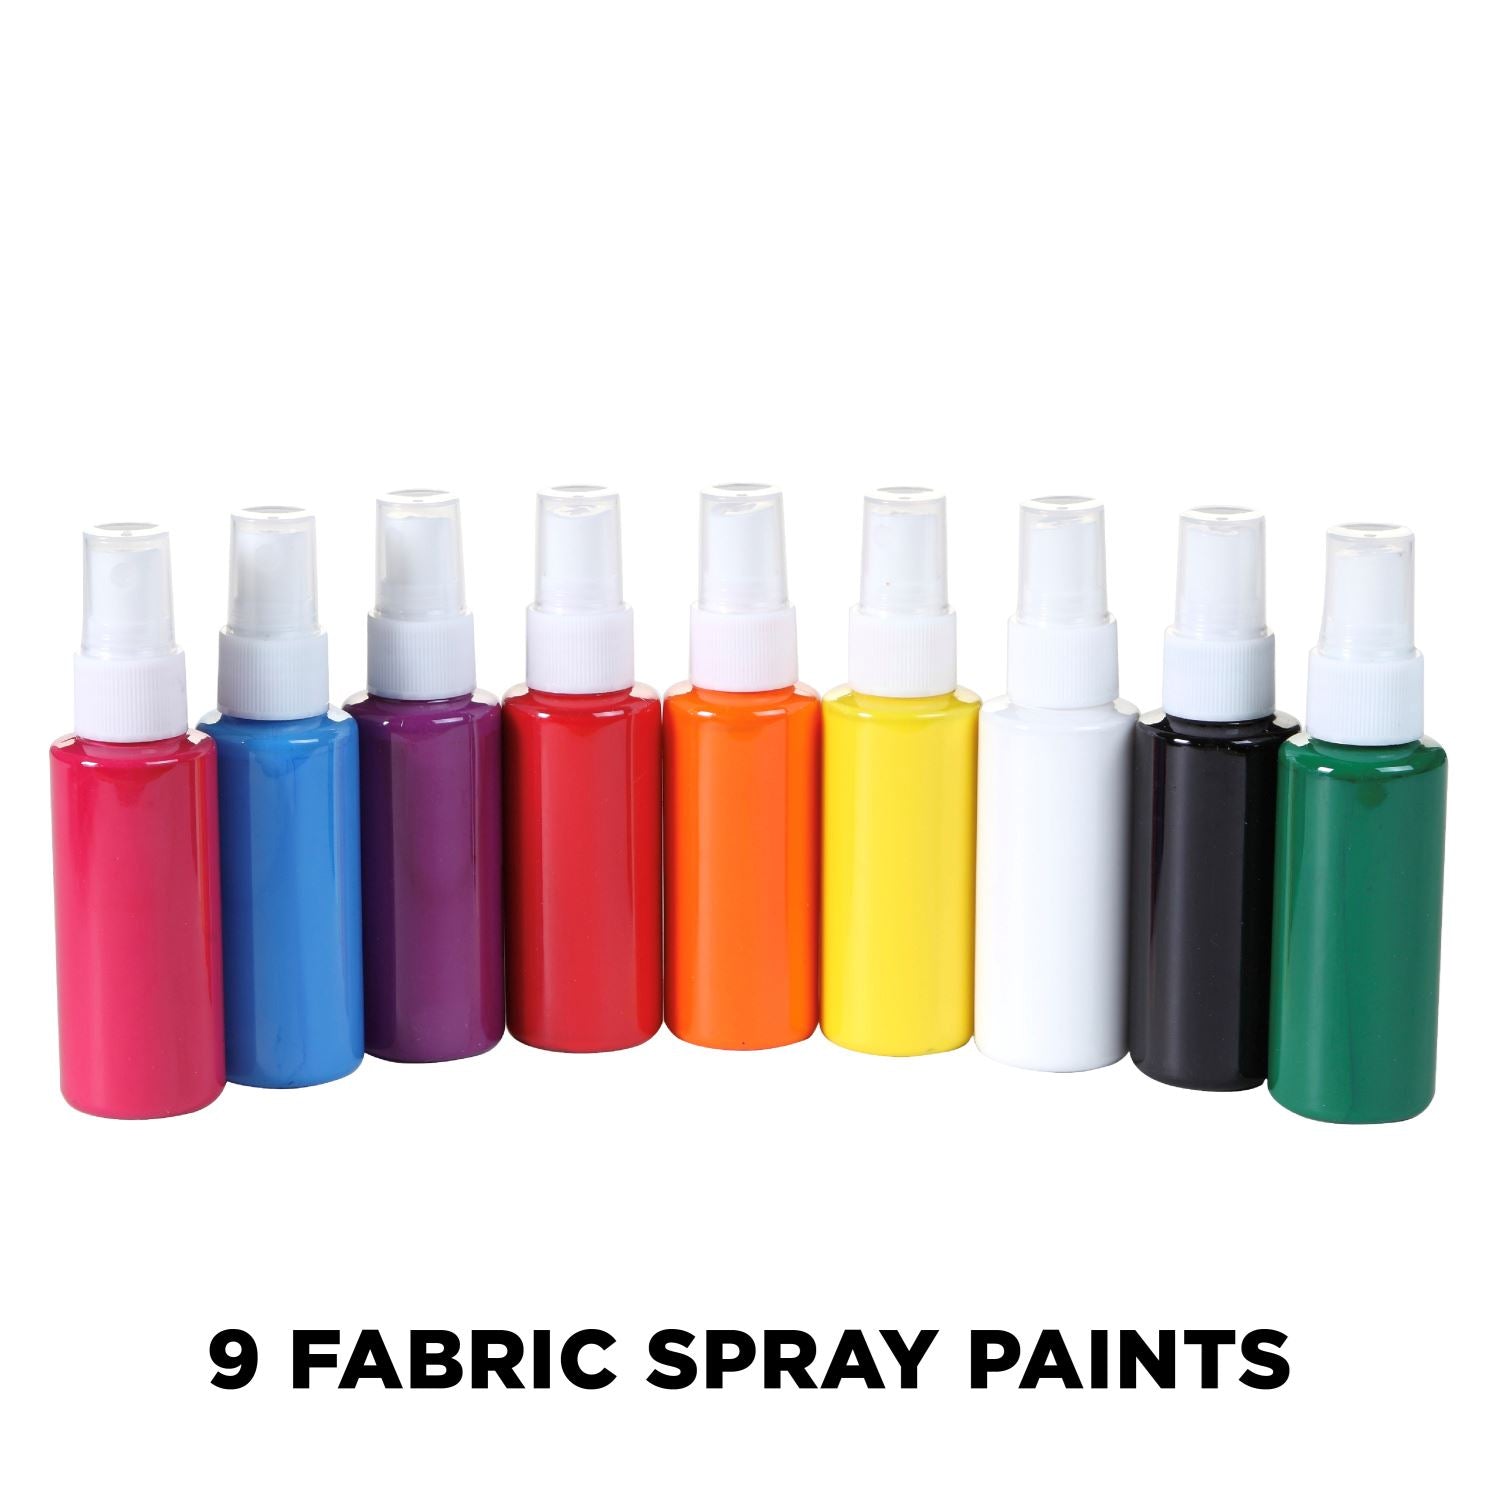 Tulip Fabric Spray Paint Rainbow Mini 7 Pack